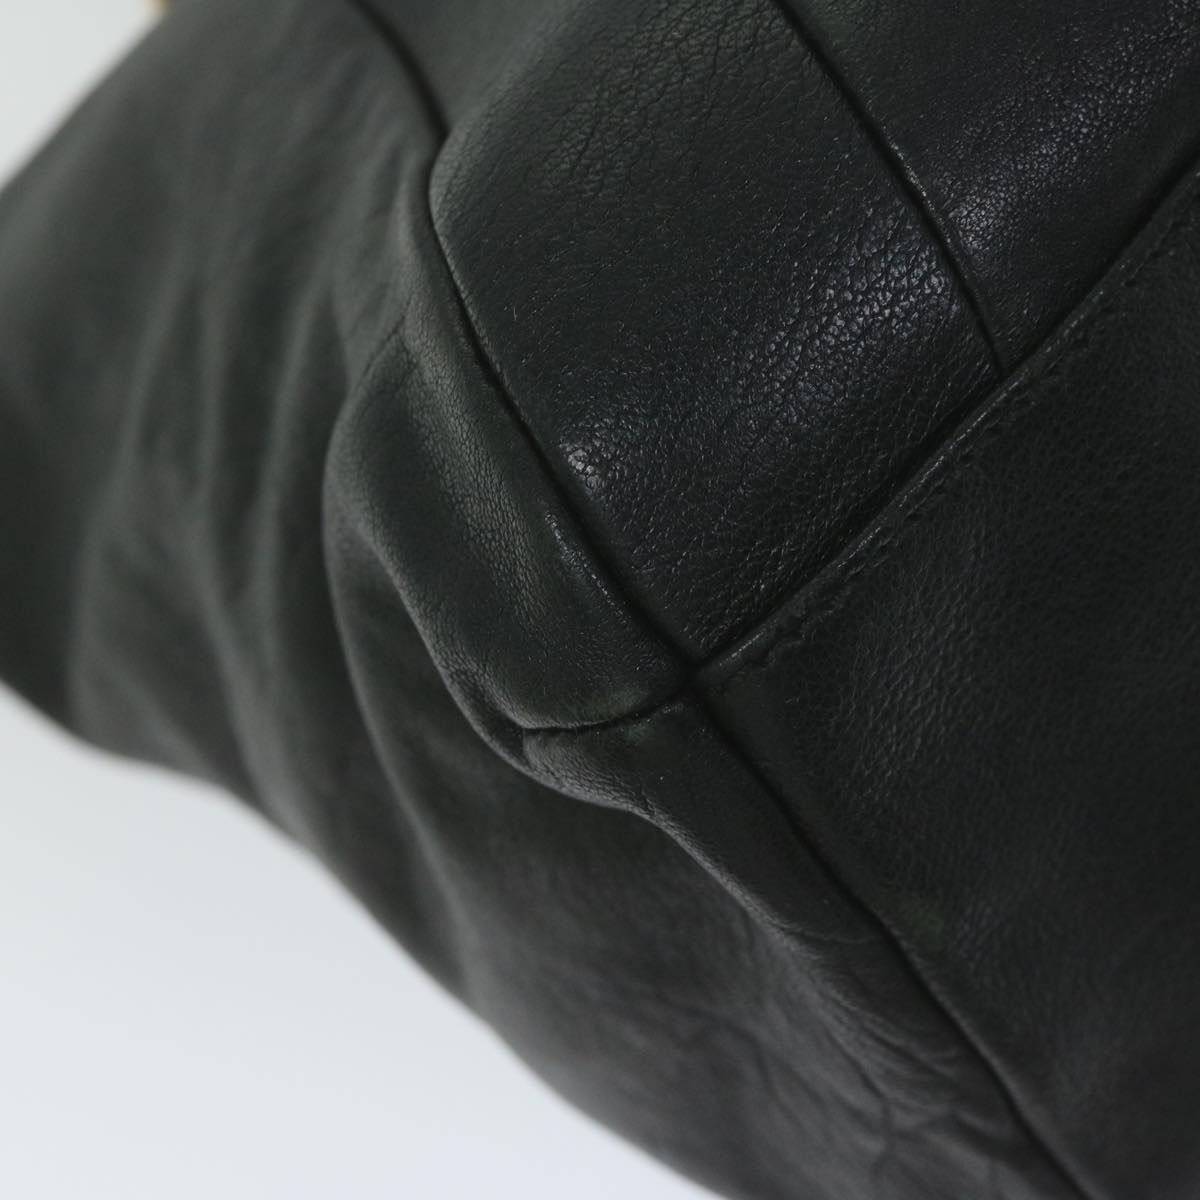 Salvatore Ferragamo Tote Bag Leather Black Auth 62419